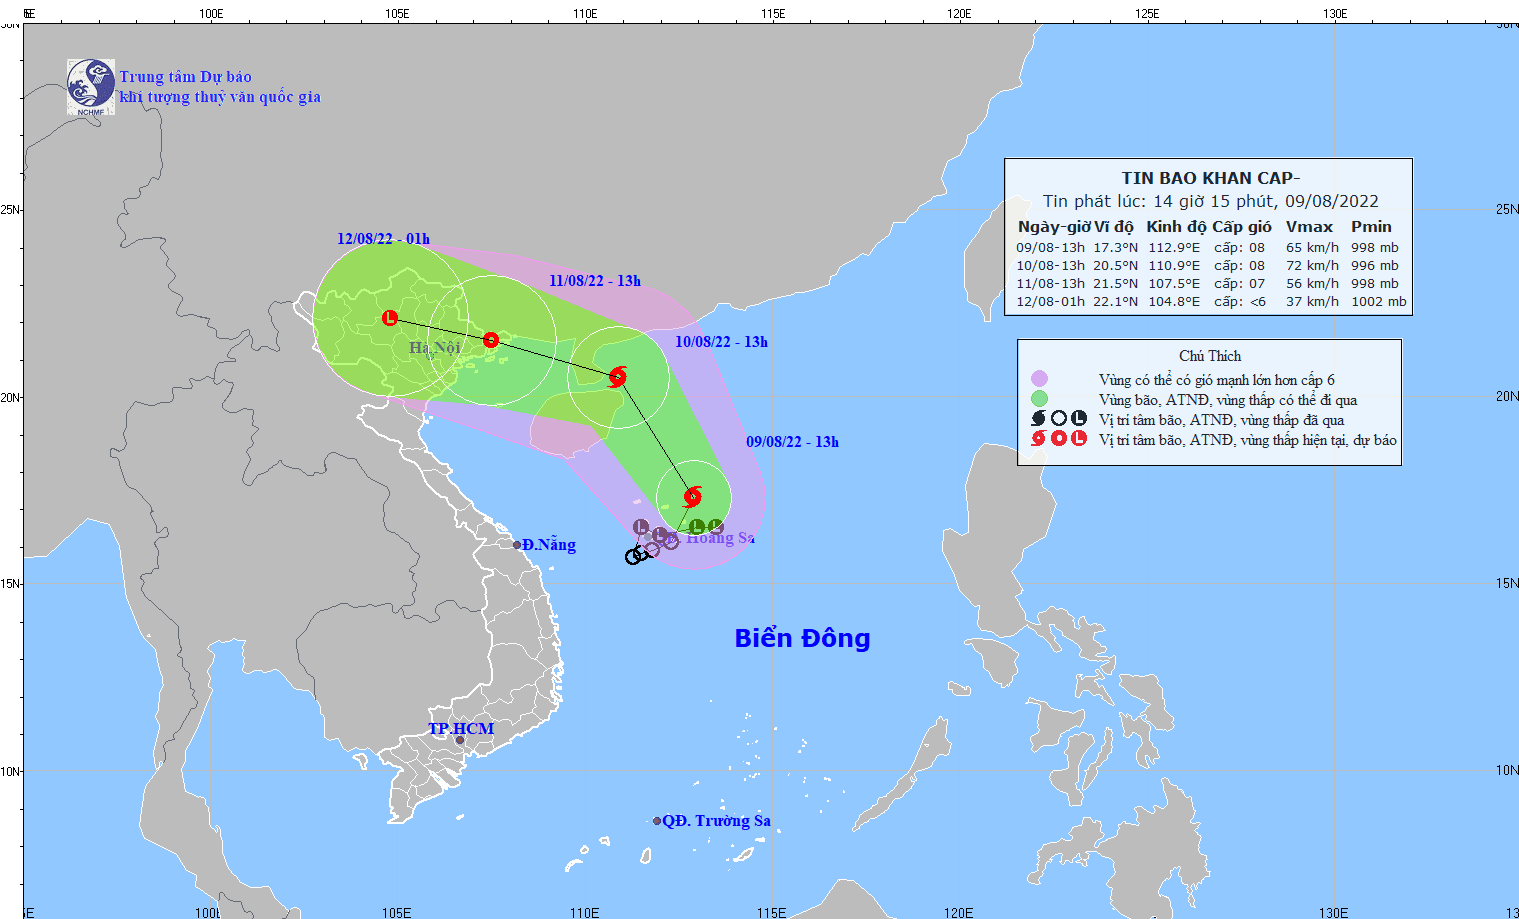 Storm MULAN is heading toward northern Vietnam.